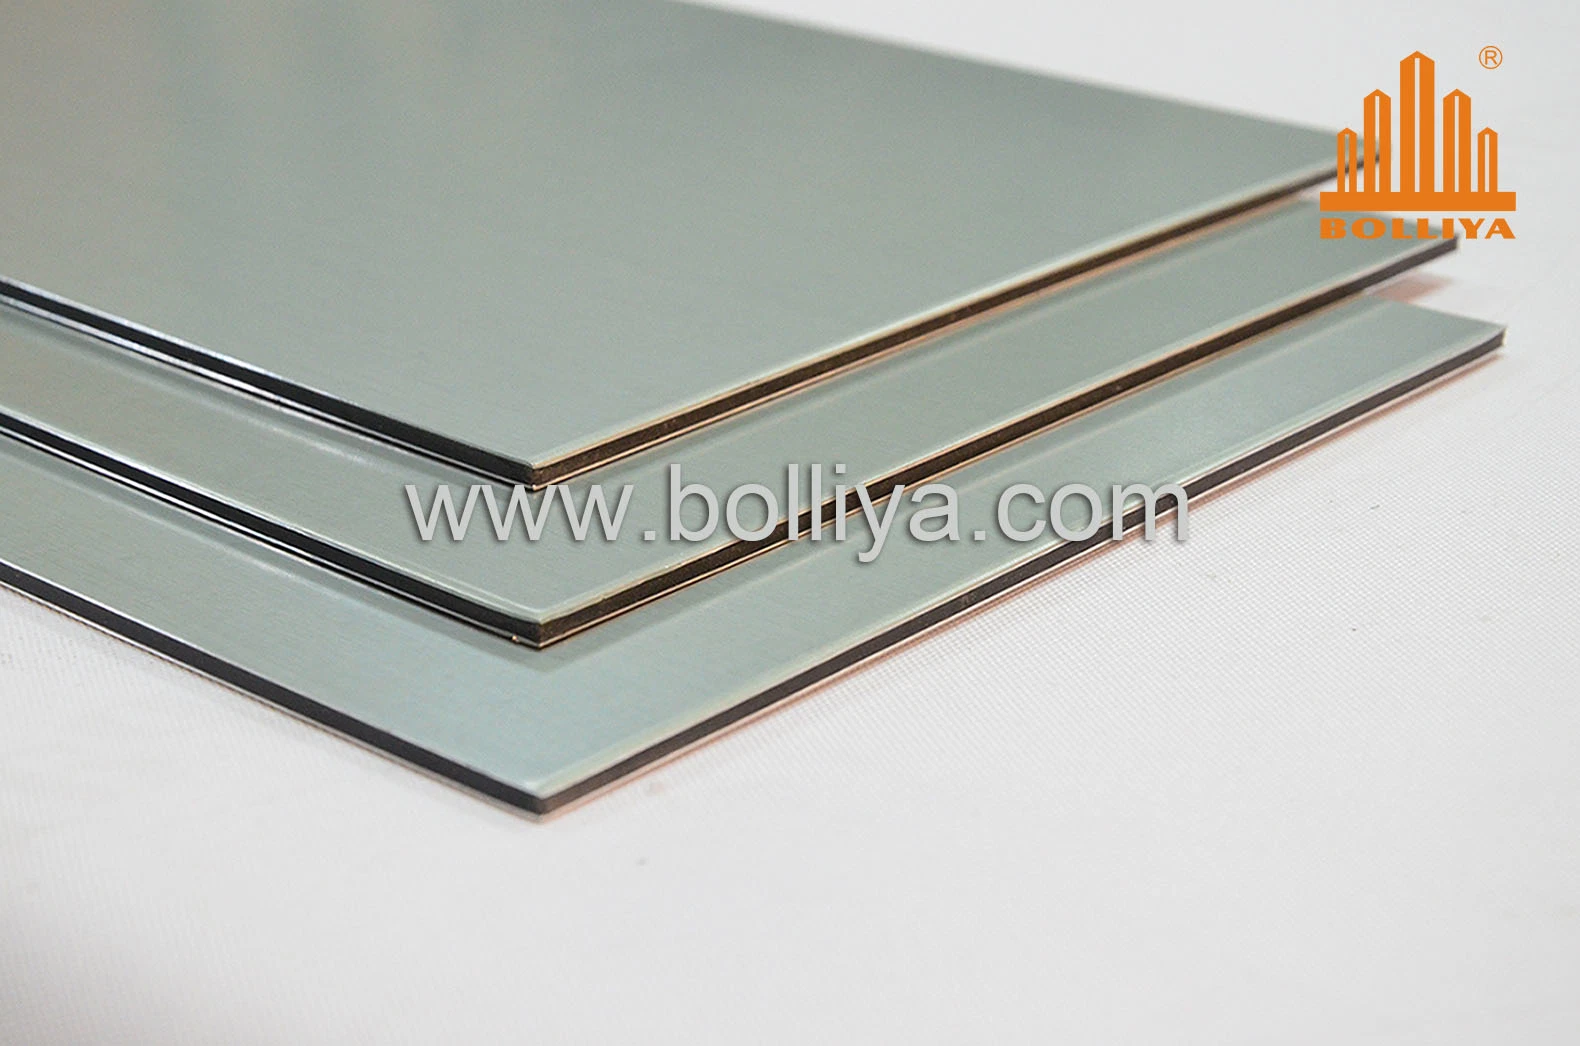 Titanium Zinc Composite Material for Curtain Wall Facade Cladding Decoration